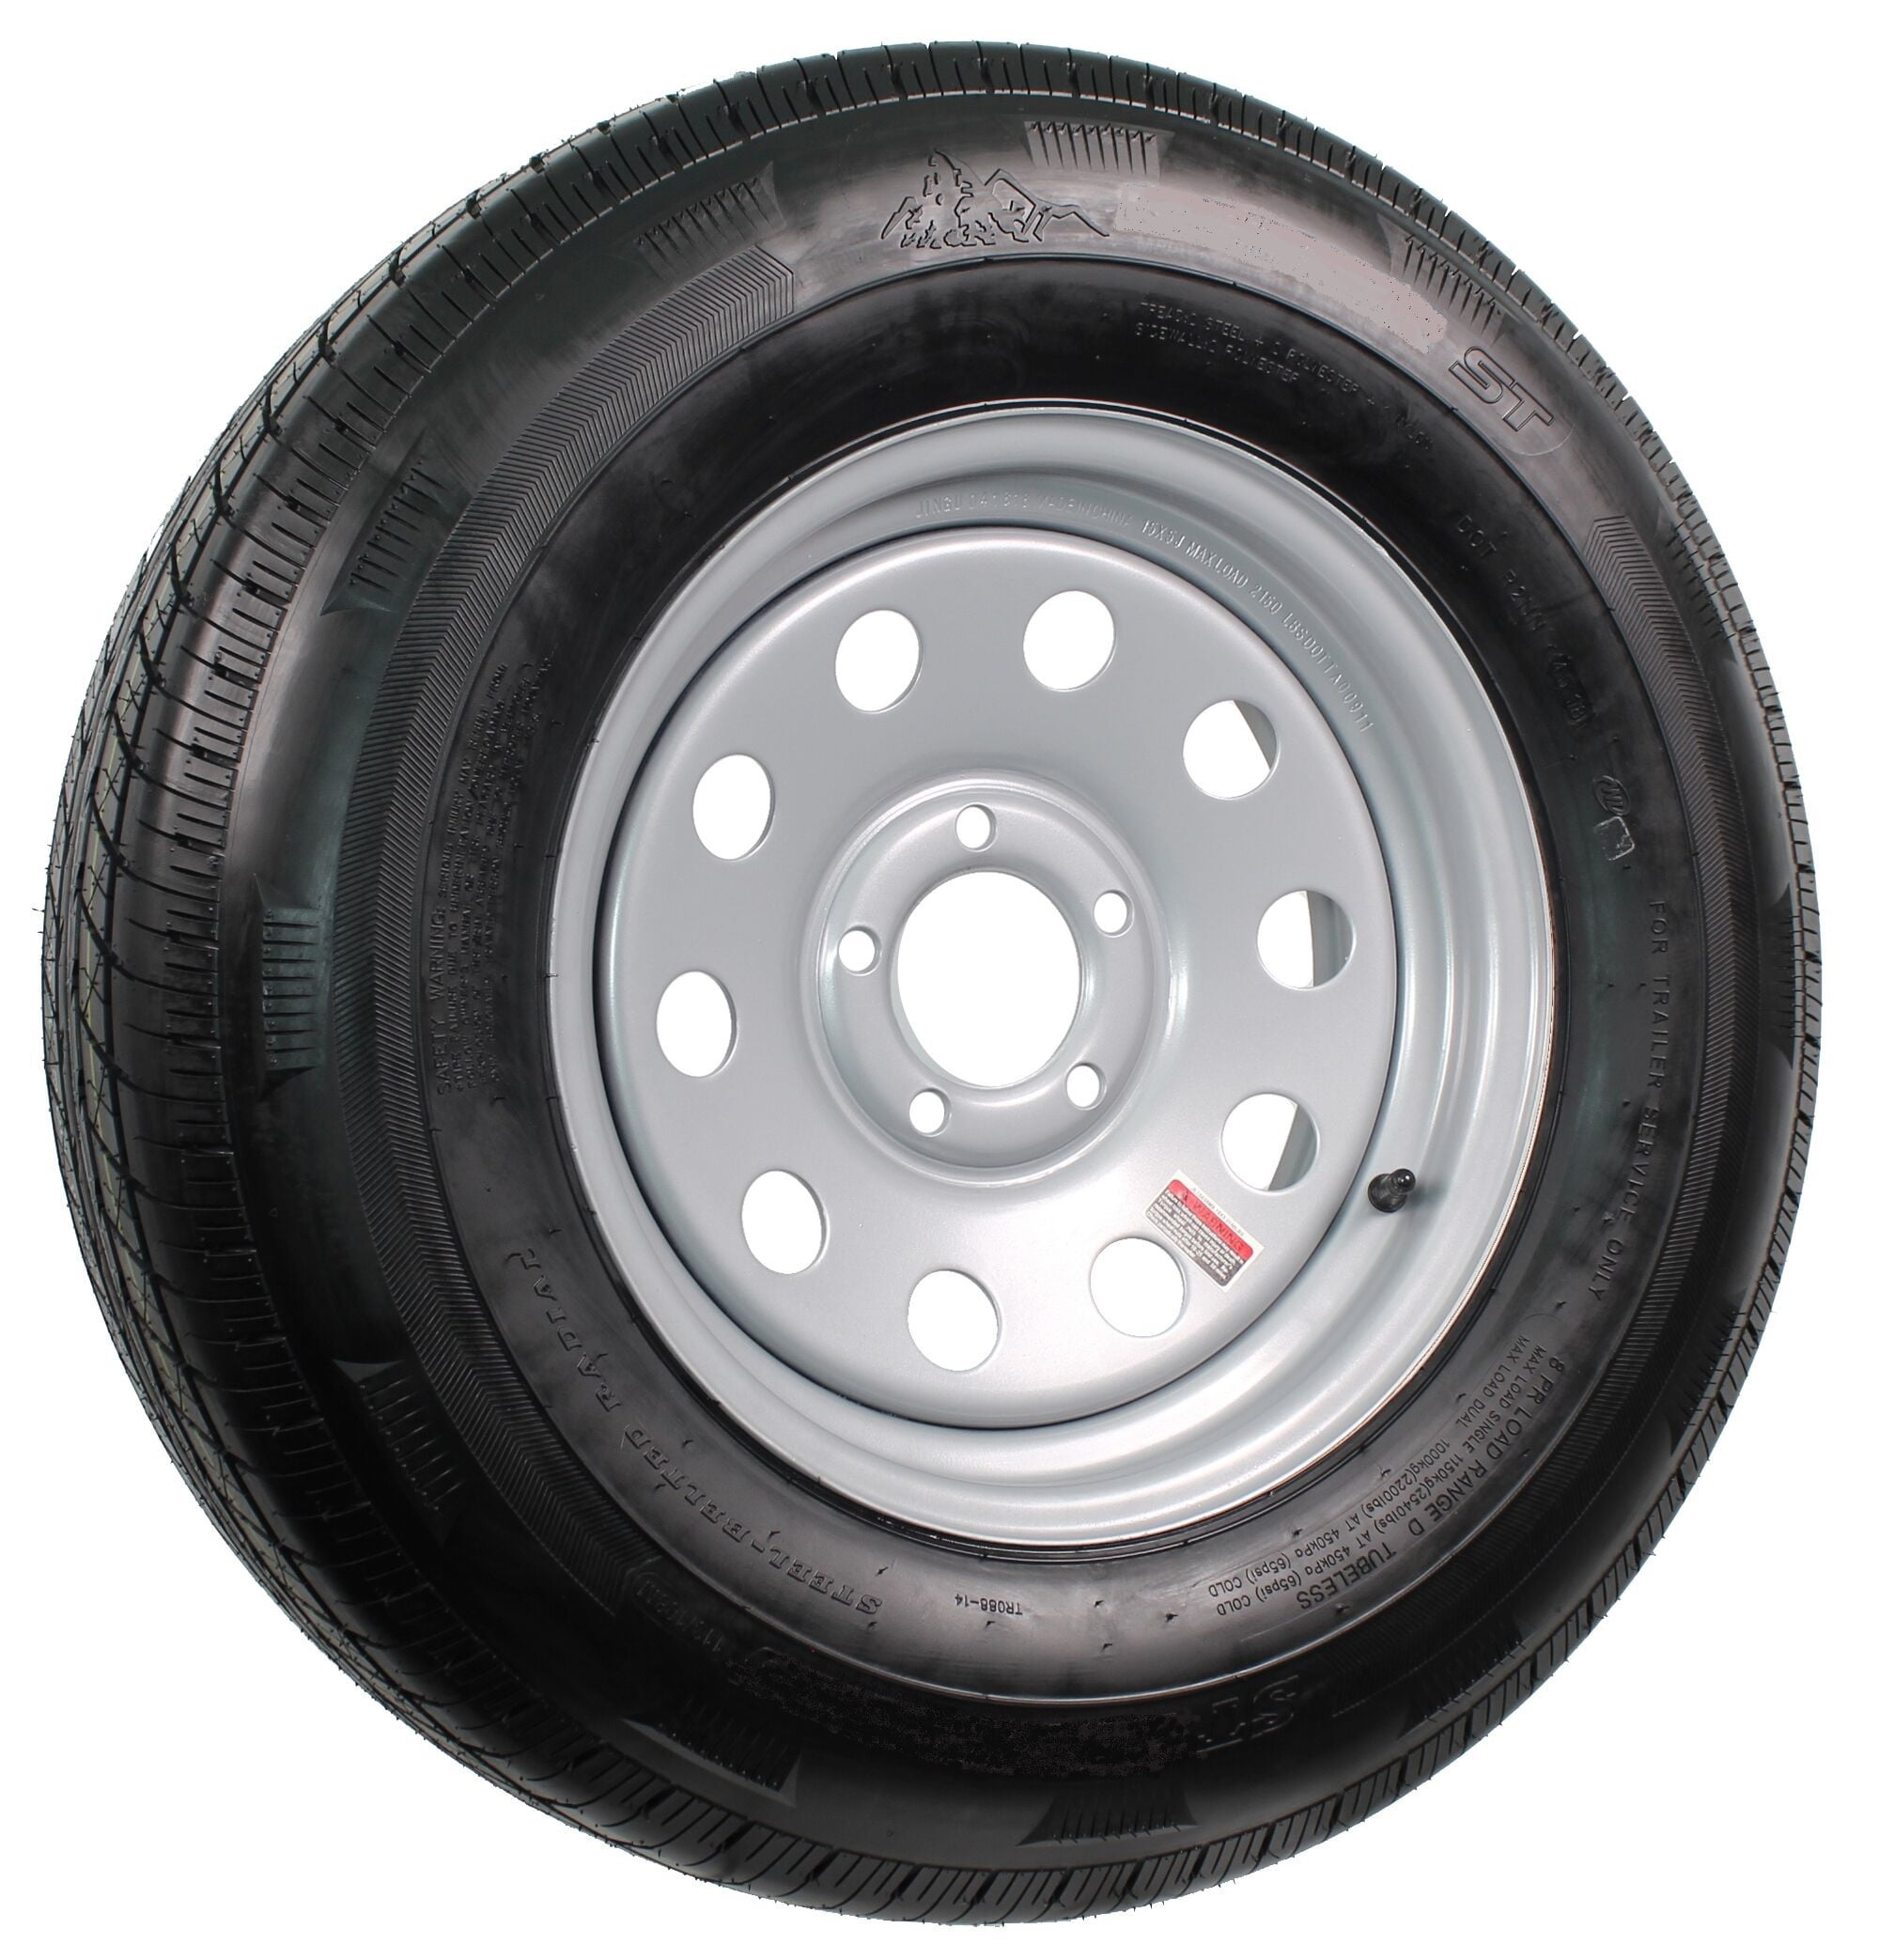 5-4.5 Modular Wheel Silver Trailer Tire On Rim 60219 ST215/75R14 LRC 1870 Lb 